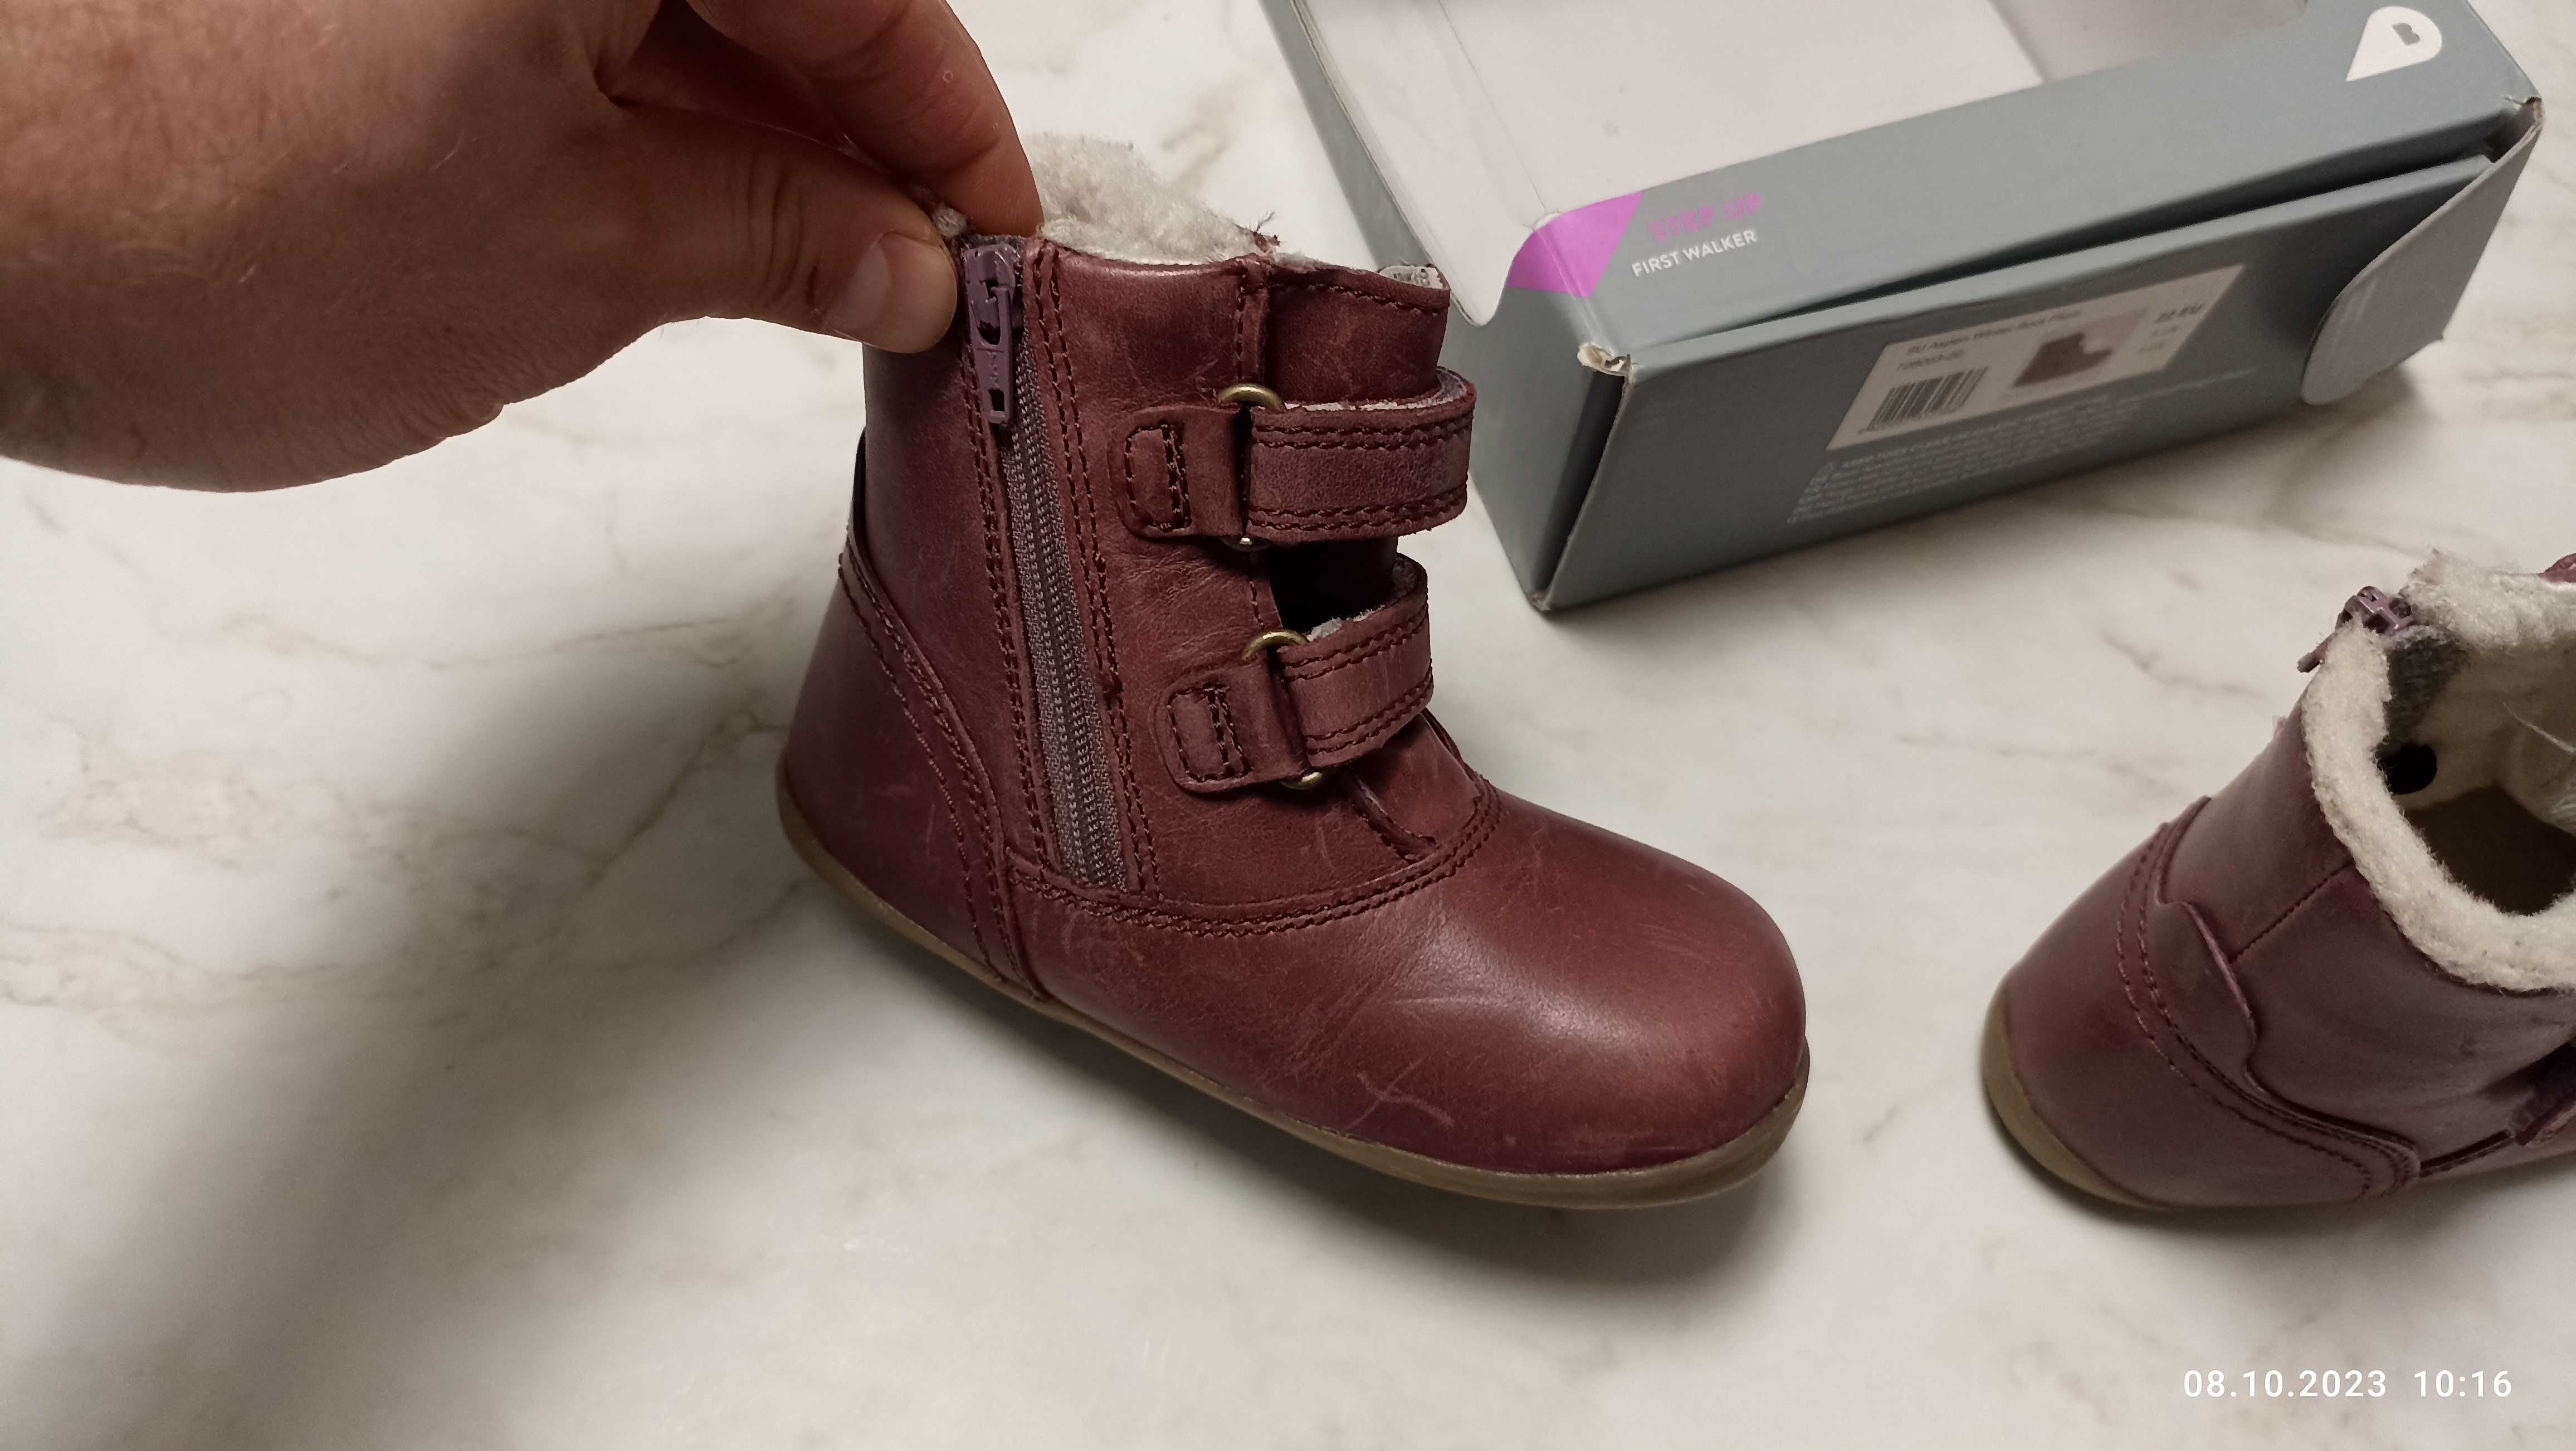 Зимни детски обувки - Bobux aspen winter boot plum, размер: 22